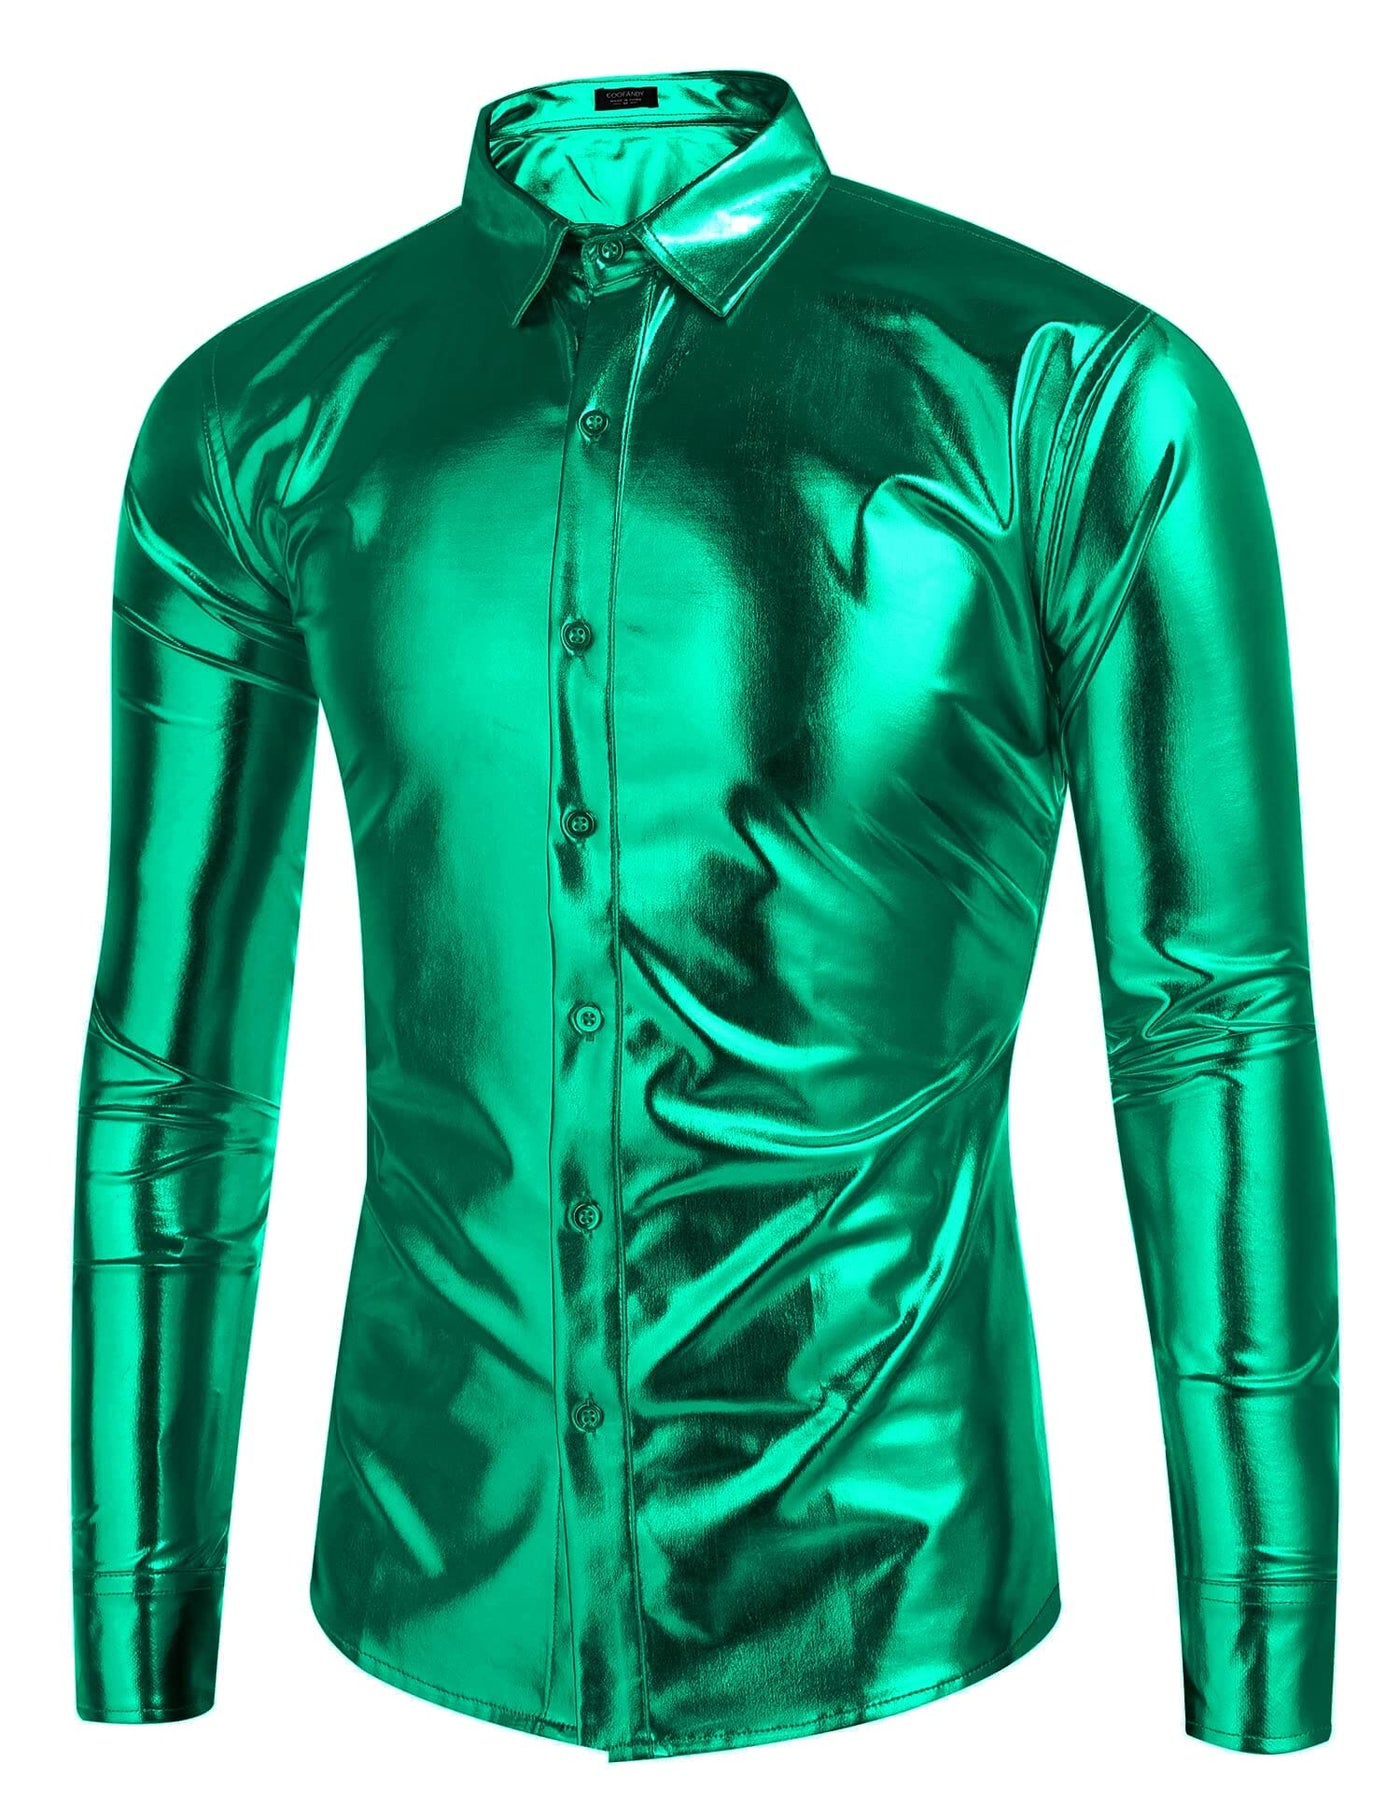 Metallic Disco Shiny Button Nightclub Party Shirt (US Only) Shirts coofandy Green S 